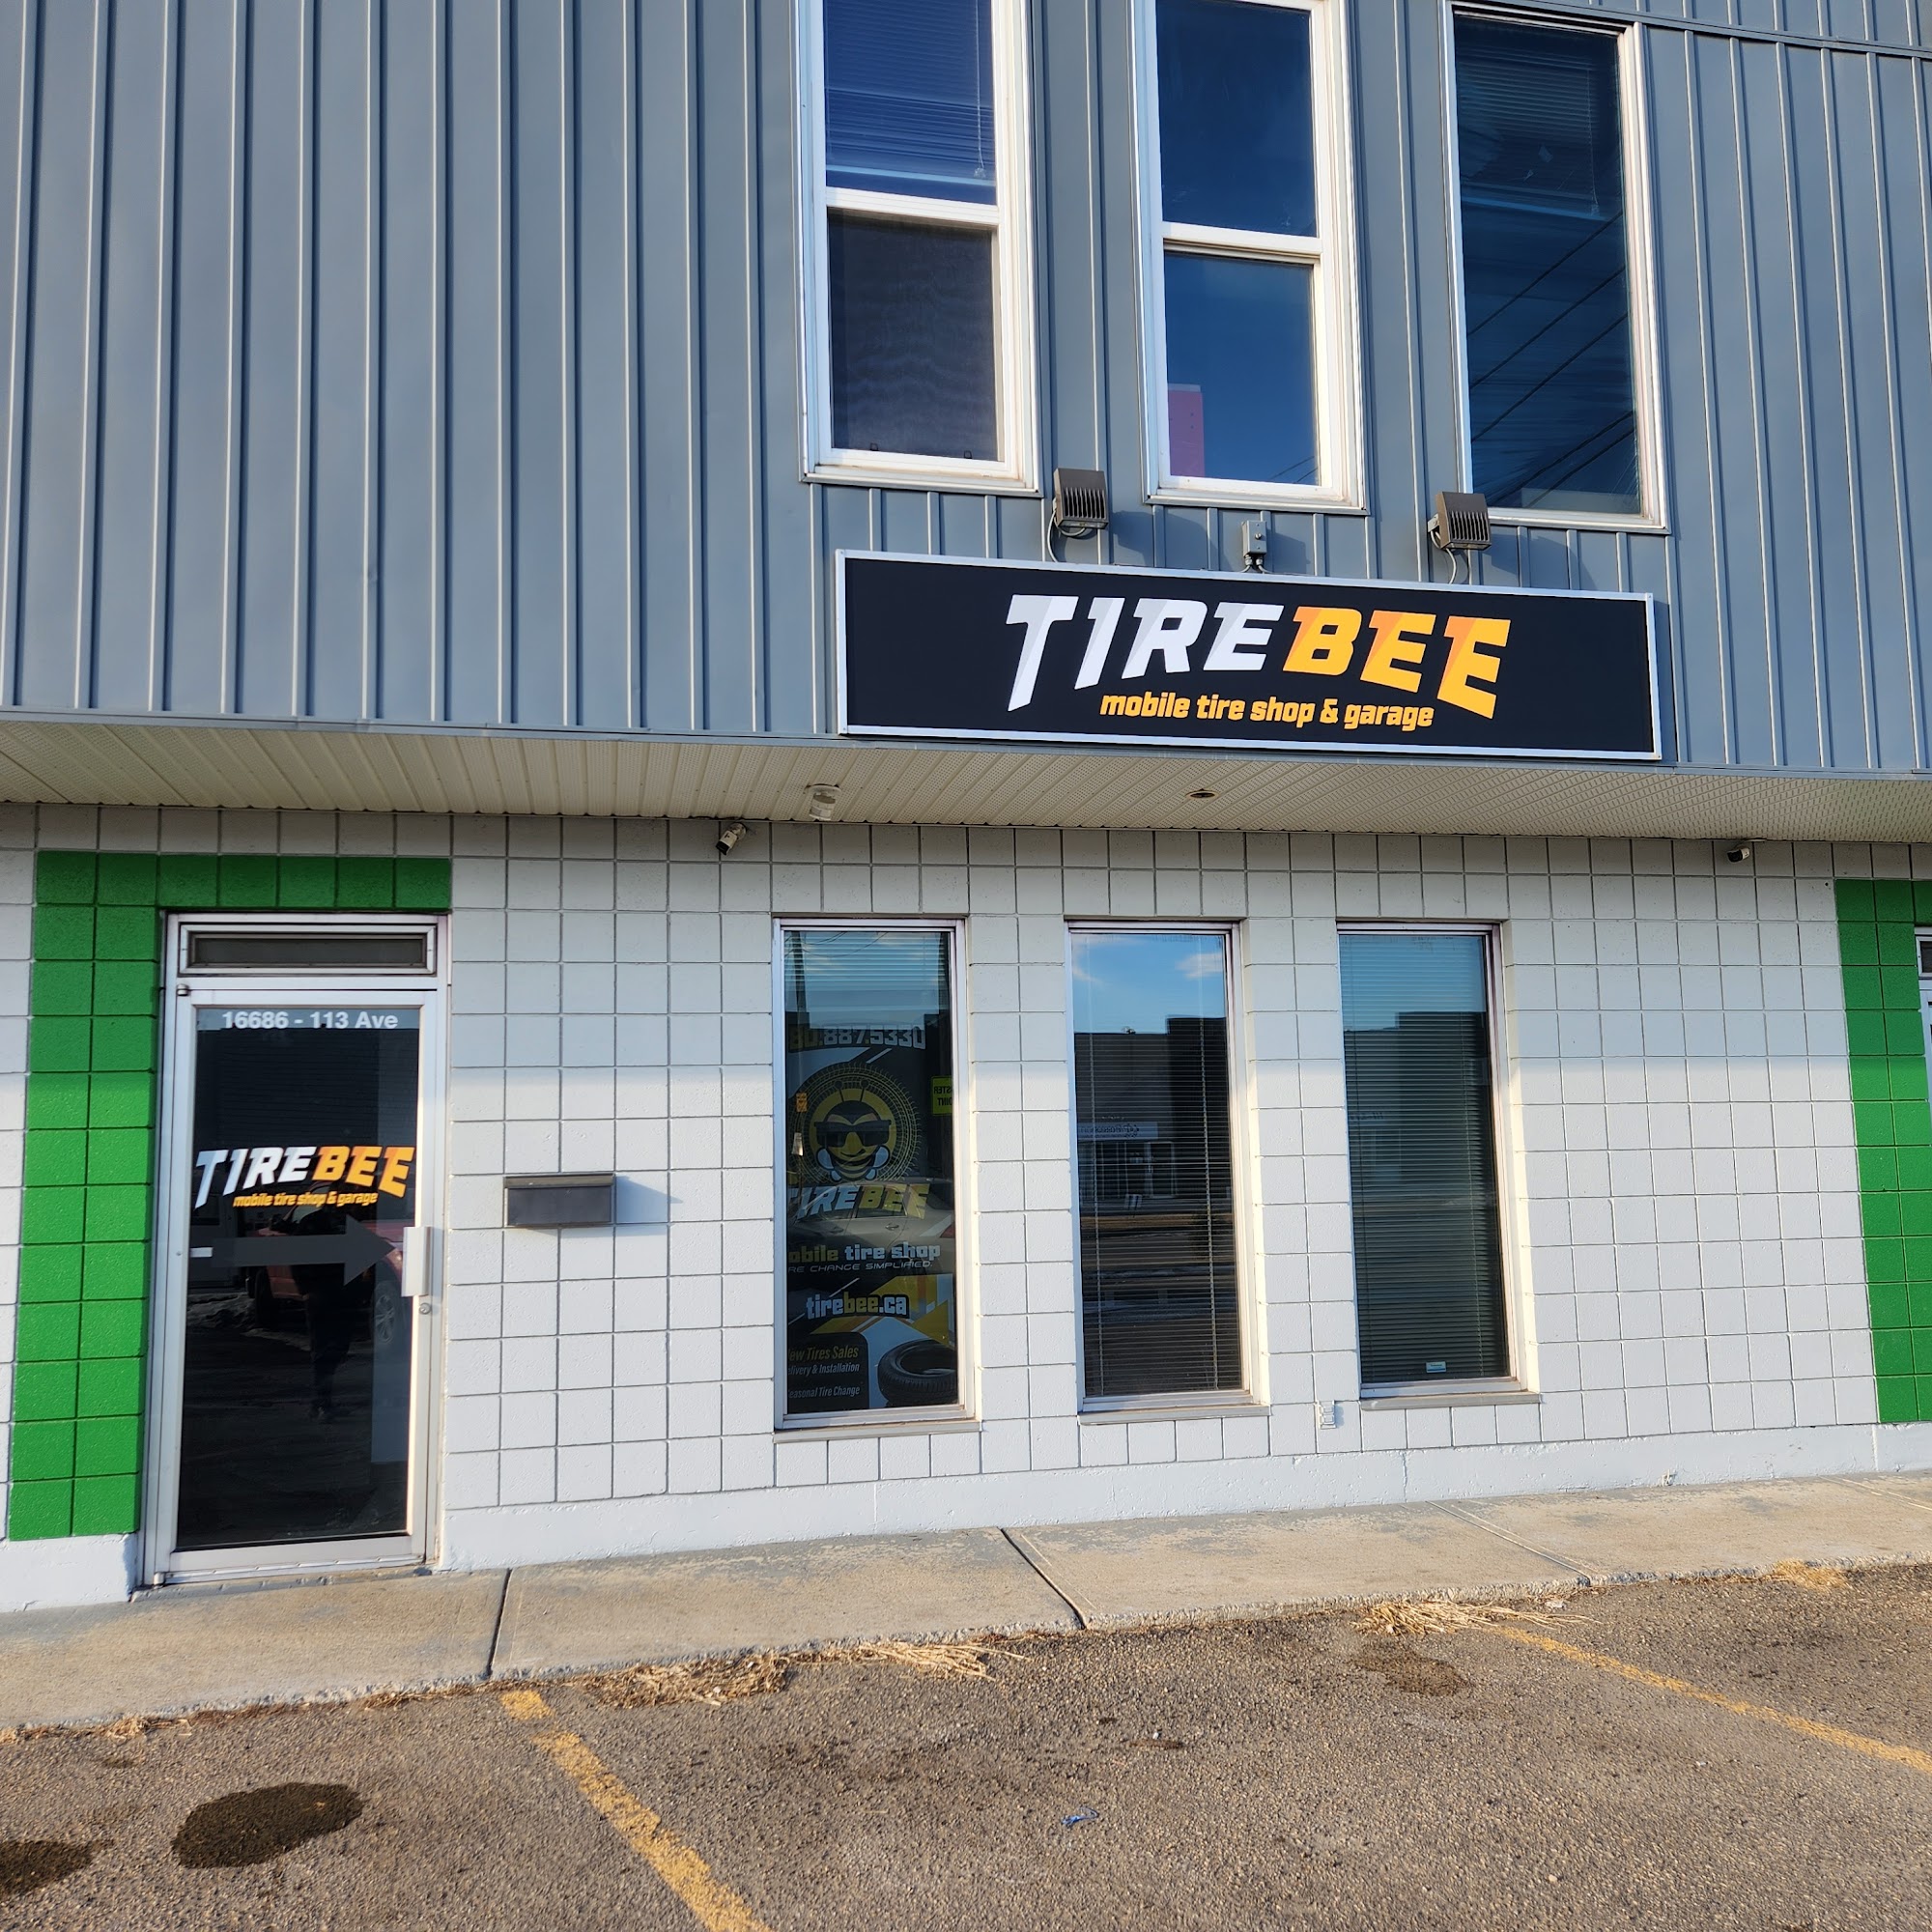 Tire Bee Inc - Mobile Tire Shop & Garage - Seasonal Tire Change - Tire Swap - Tire Repair - New Tires & Wheels - TPMS